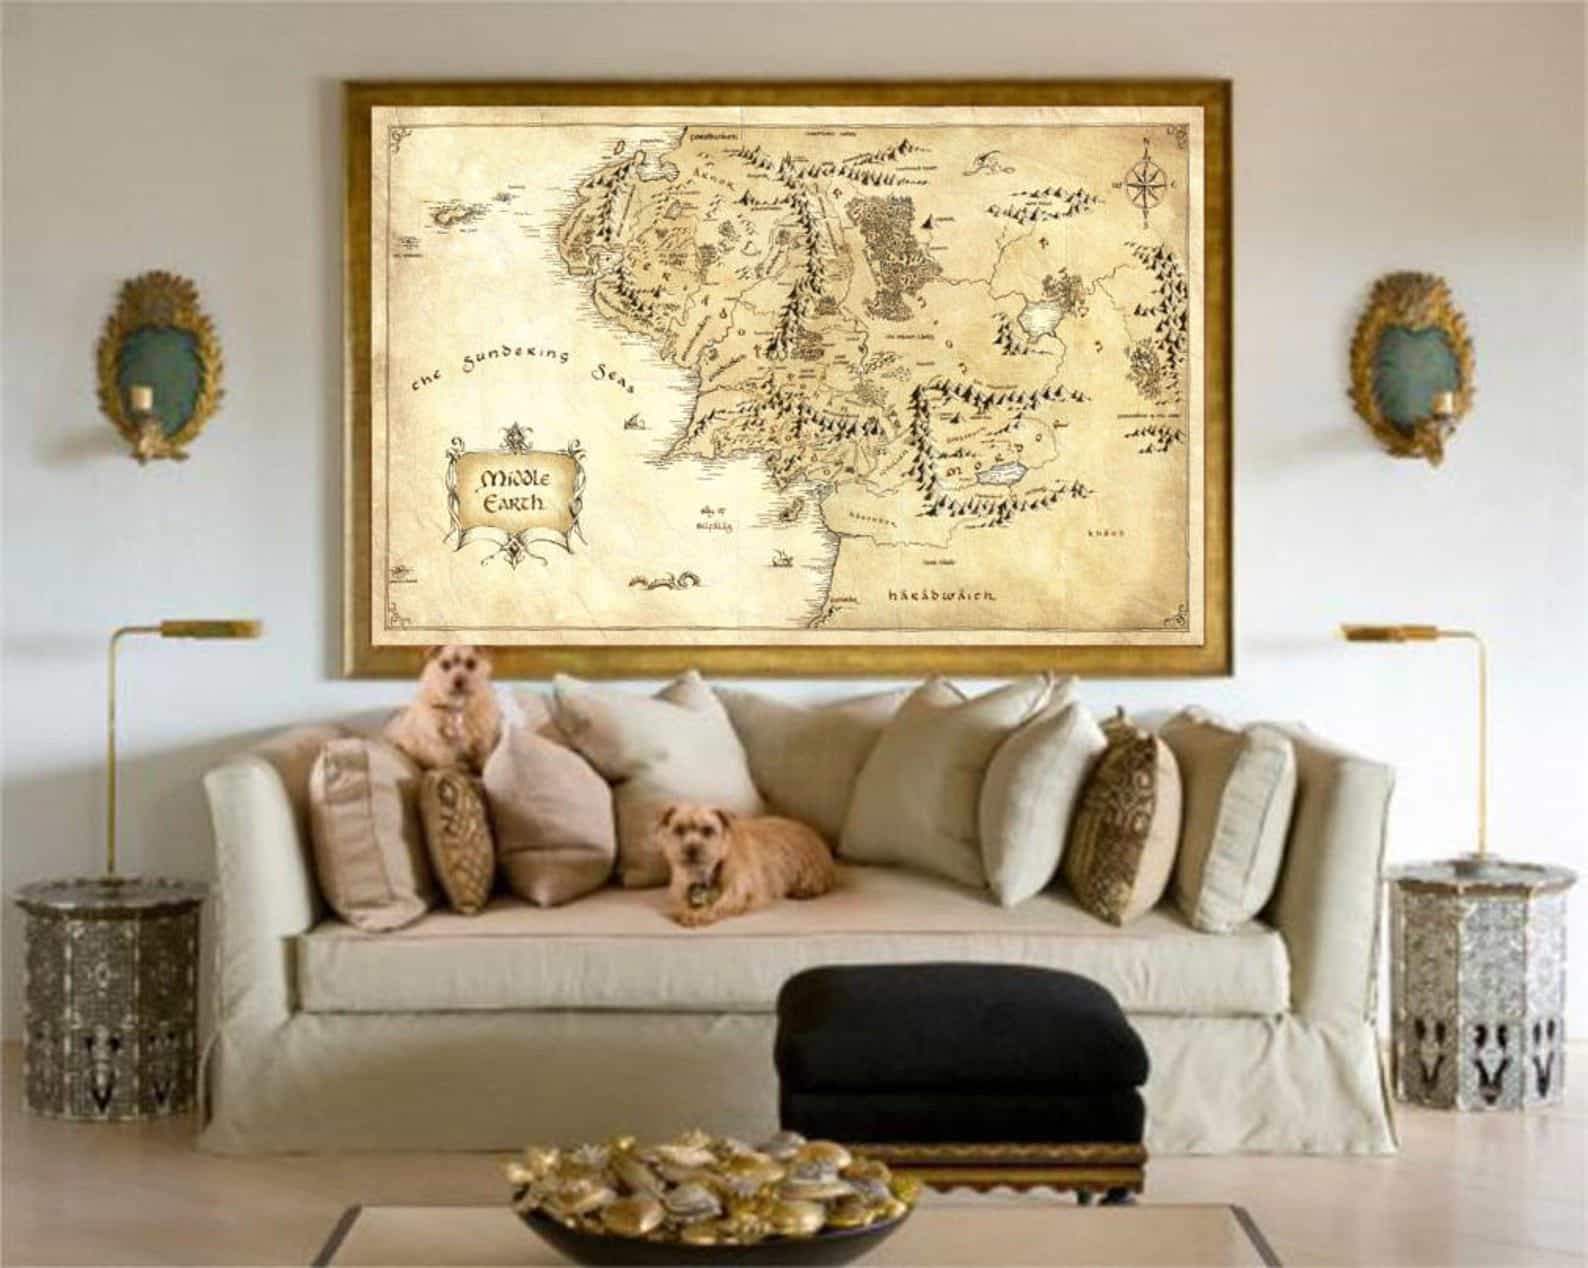 Festive, elegant map of Middle Earth from J.R.R. Tolkien's beloved 